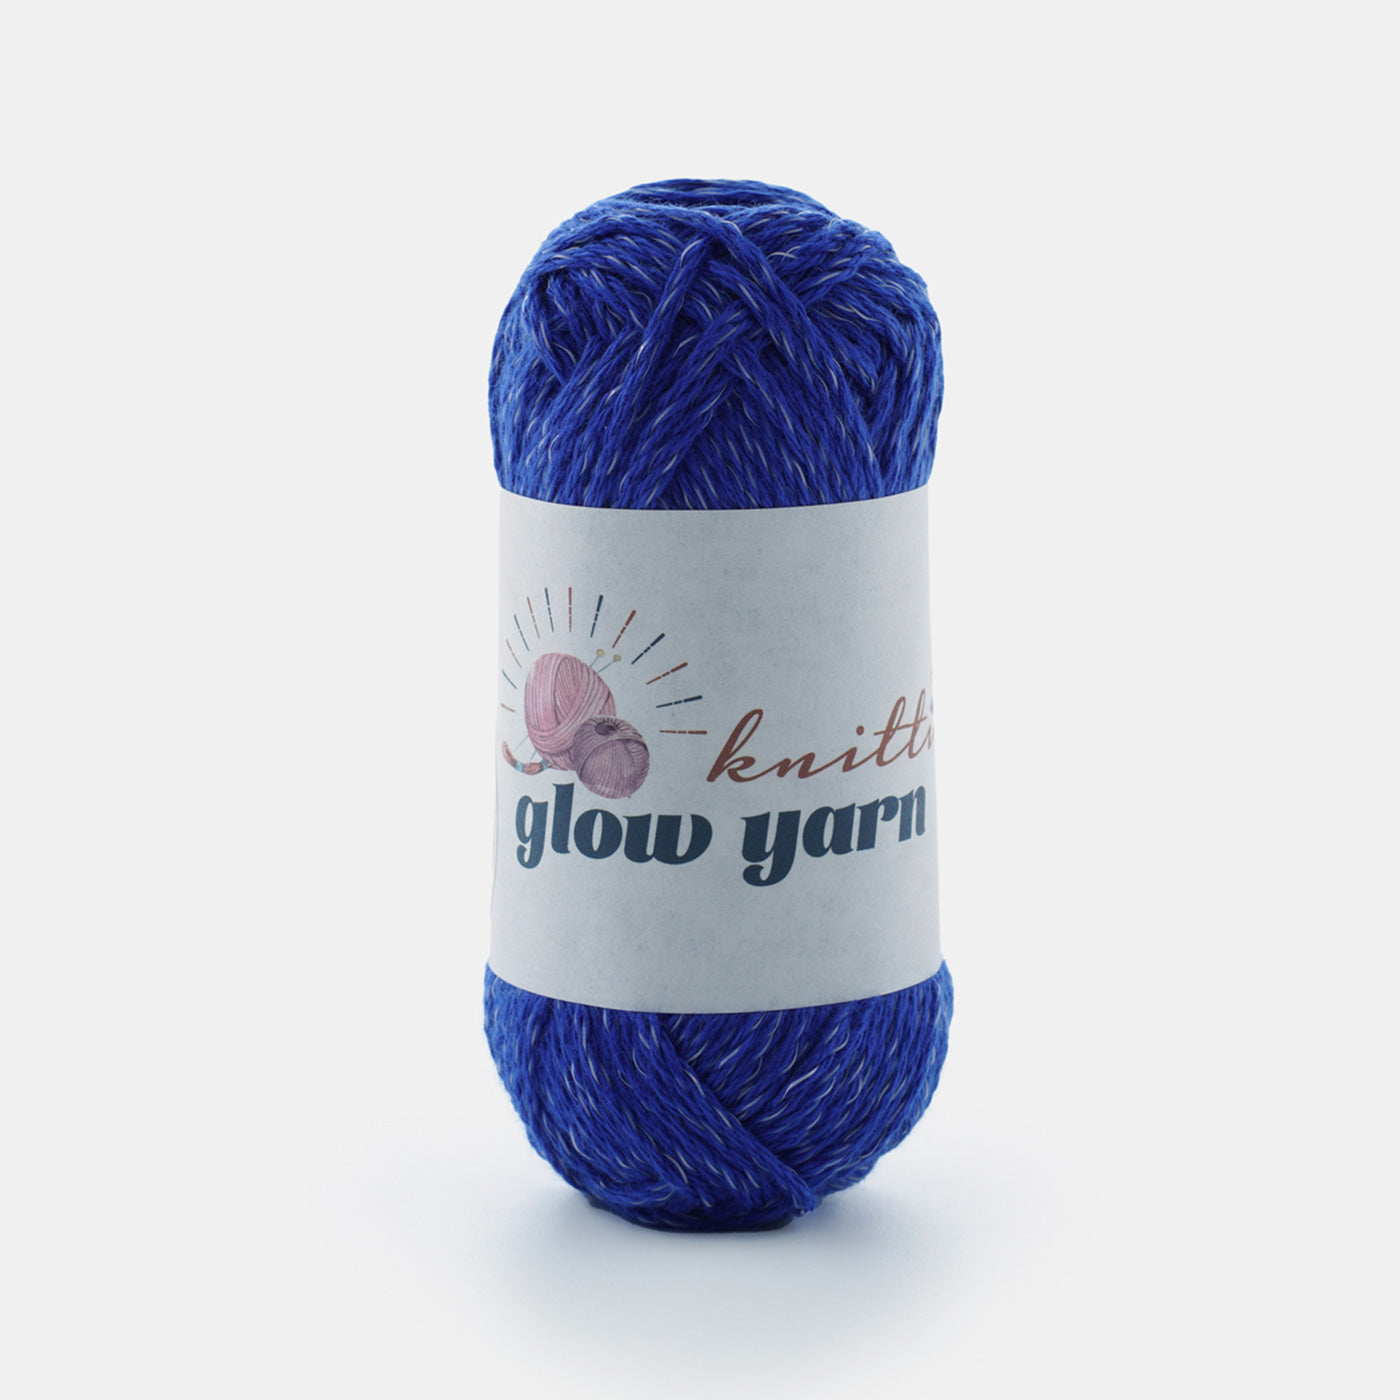 Polyester Luminous yarn glow in the dark fluorescent crochet yarn